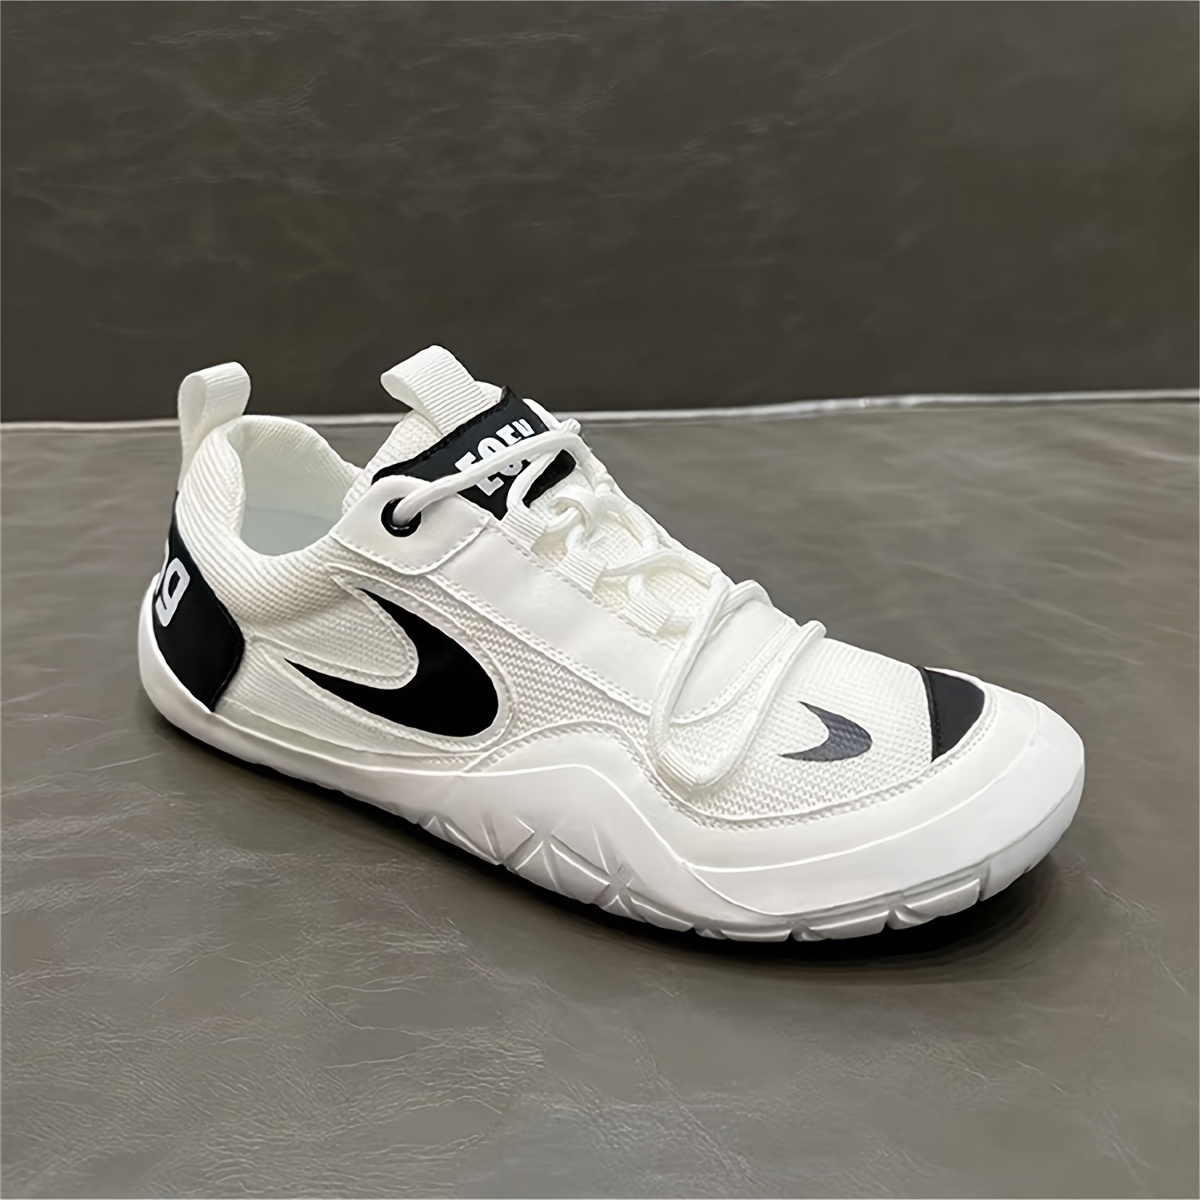 moon pattern casual shoes men s durable non slip breathable details 6